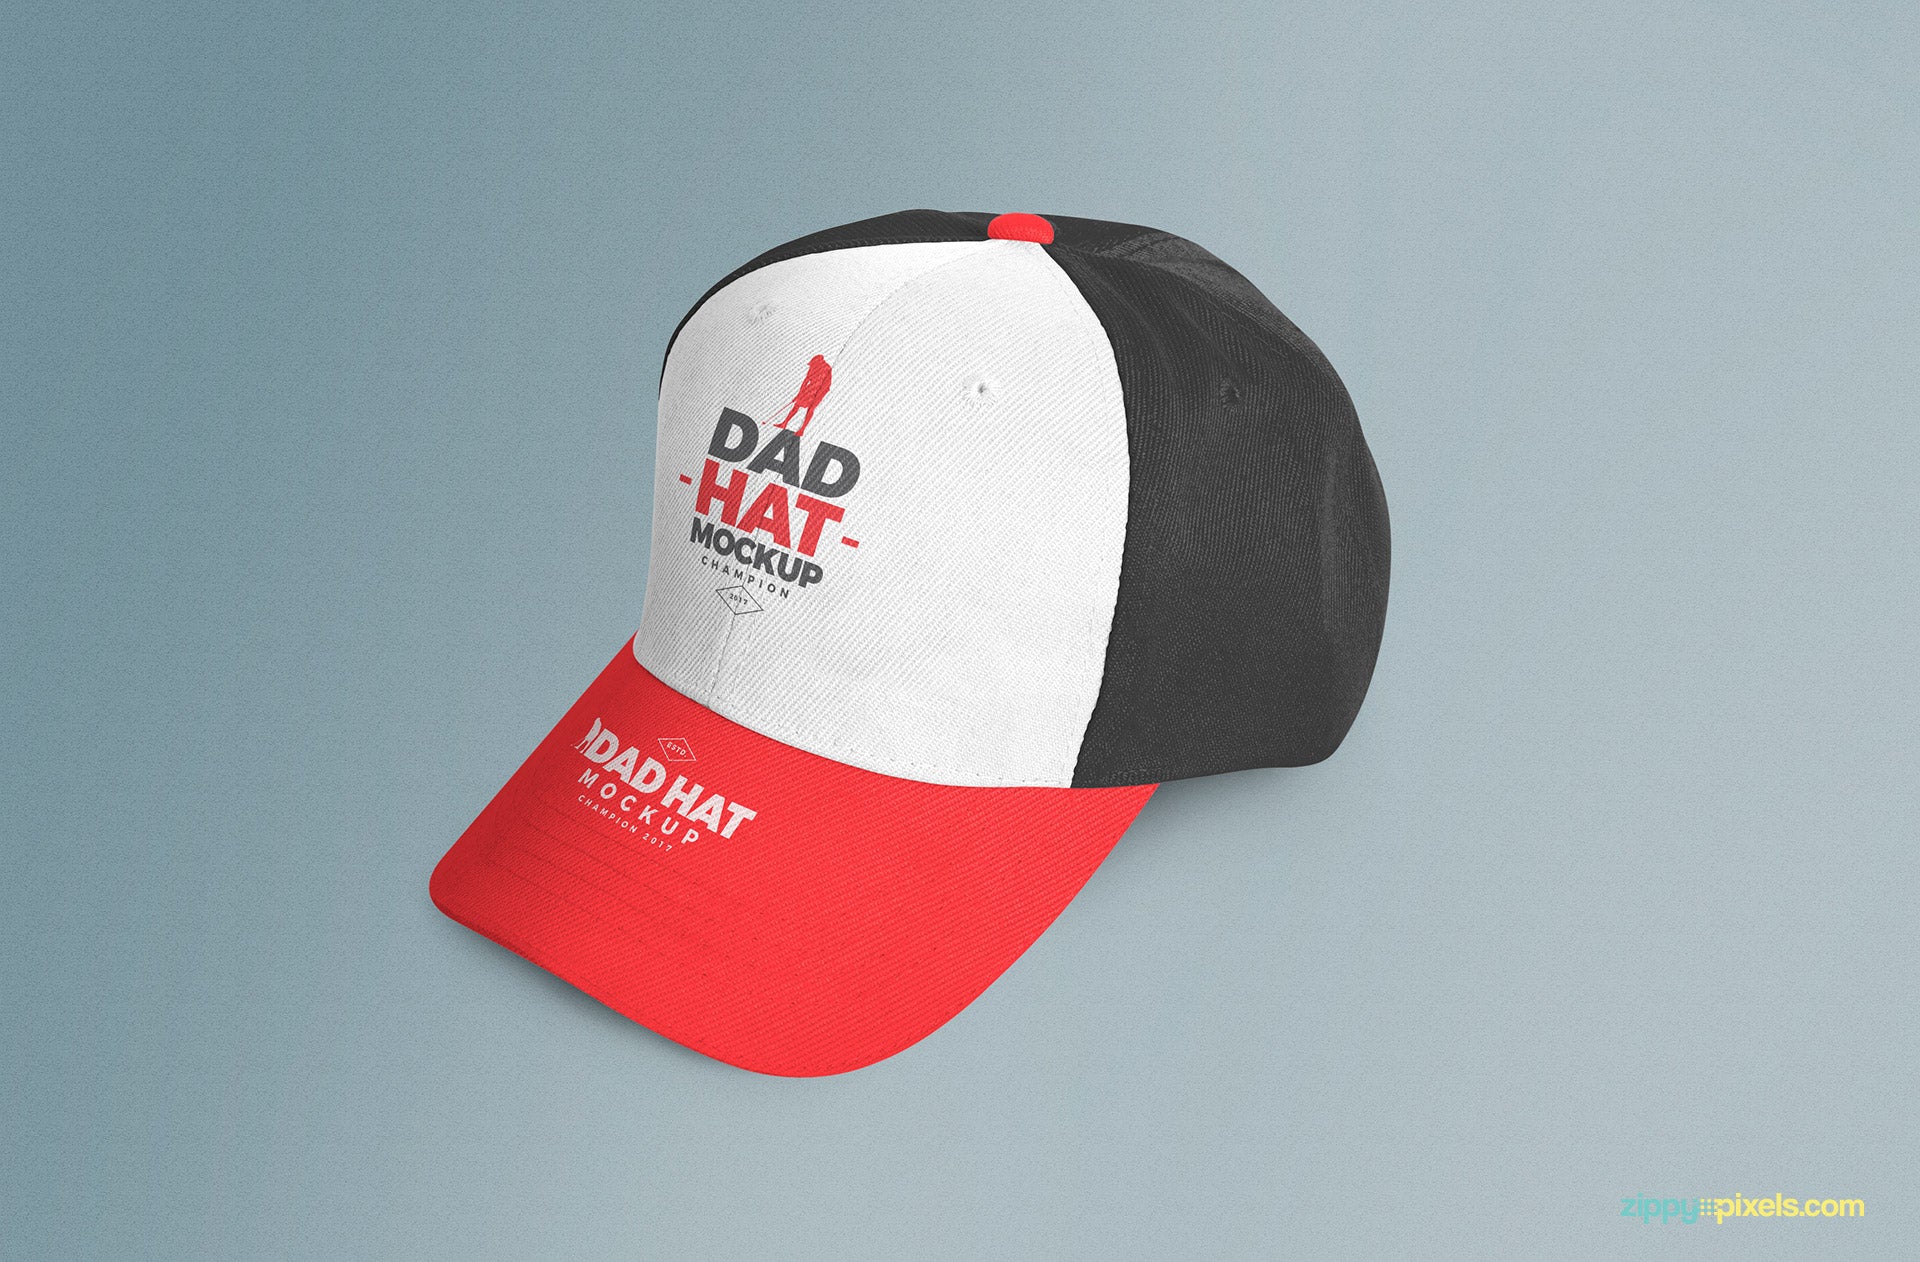 Dad hat baseball cap mockup template Royalty Free Vector